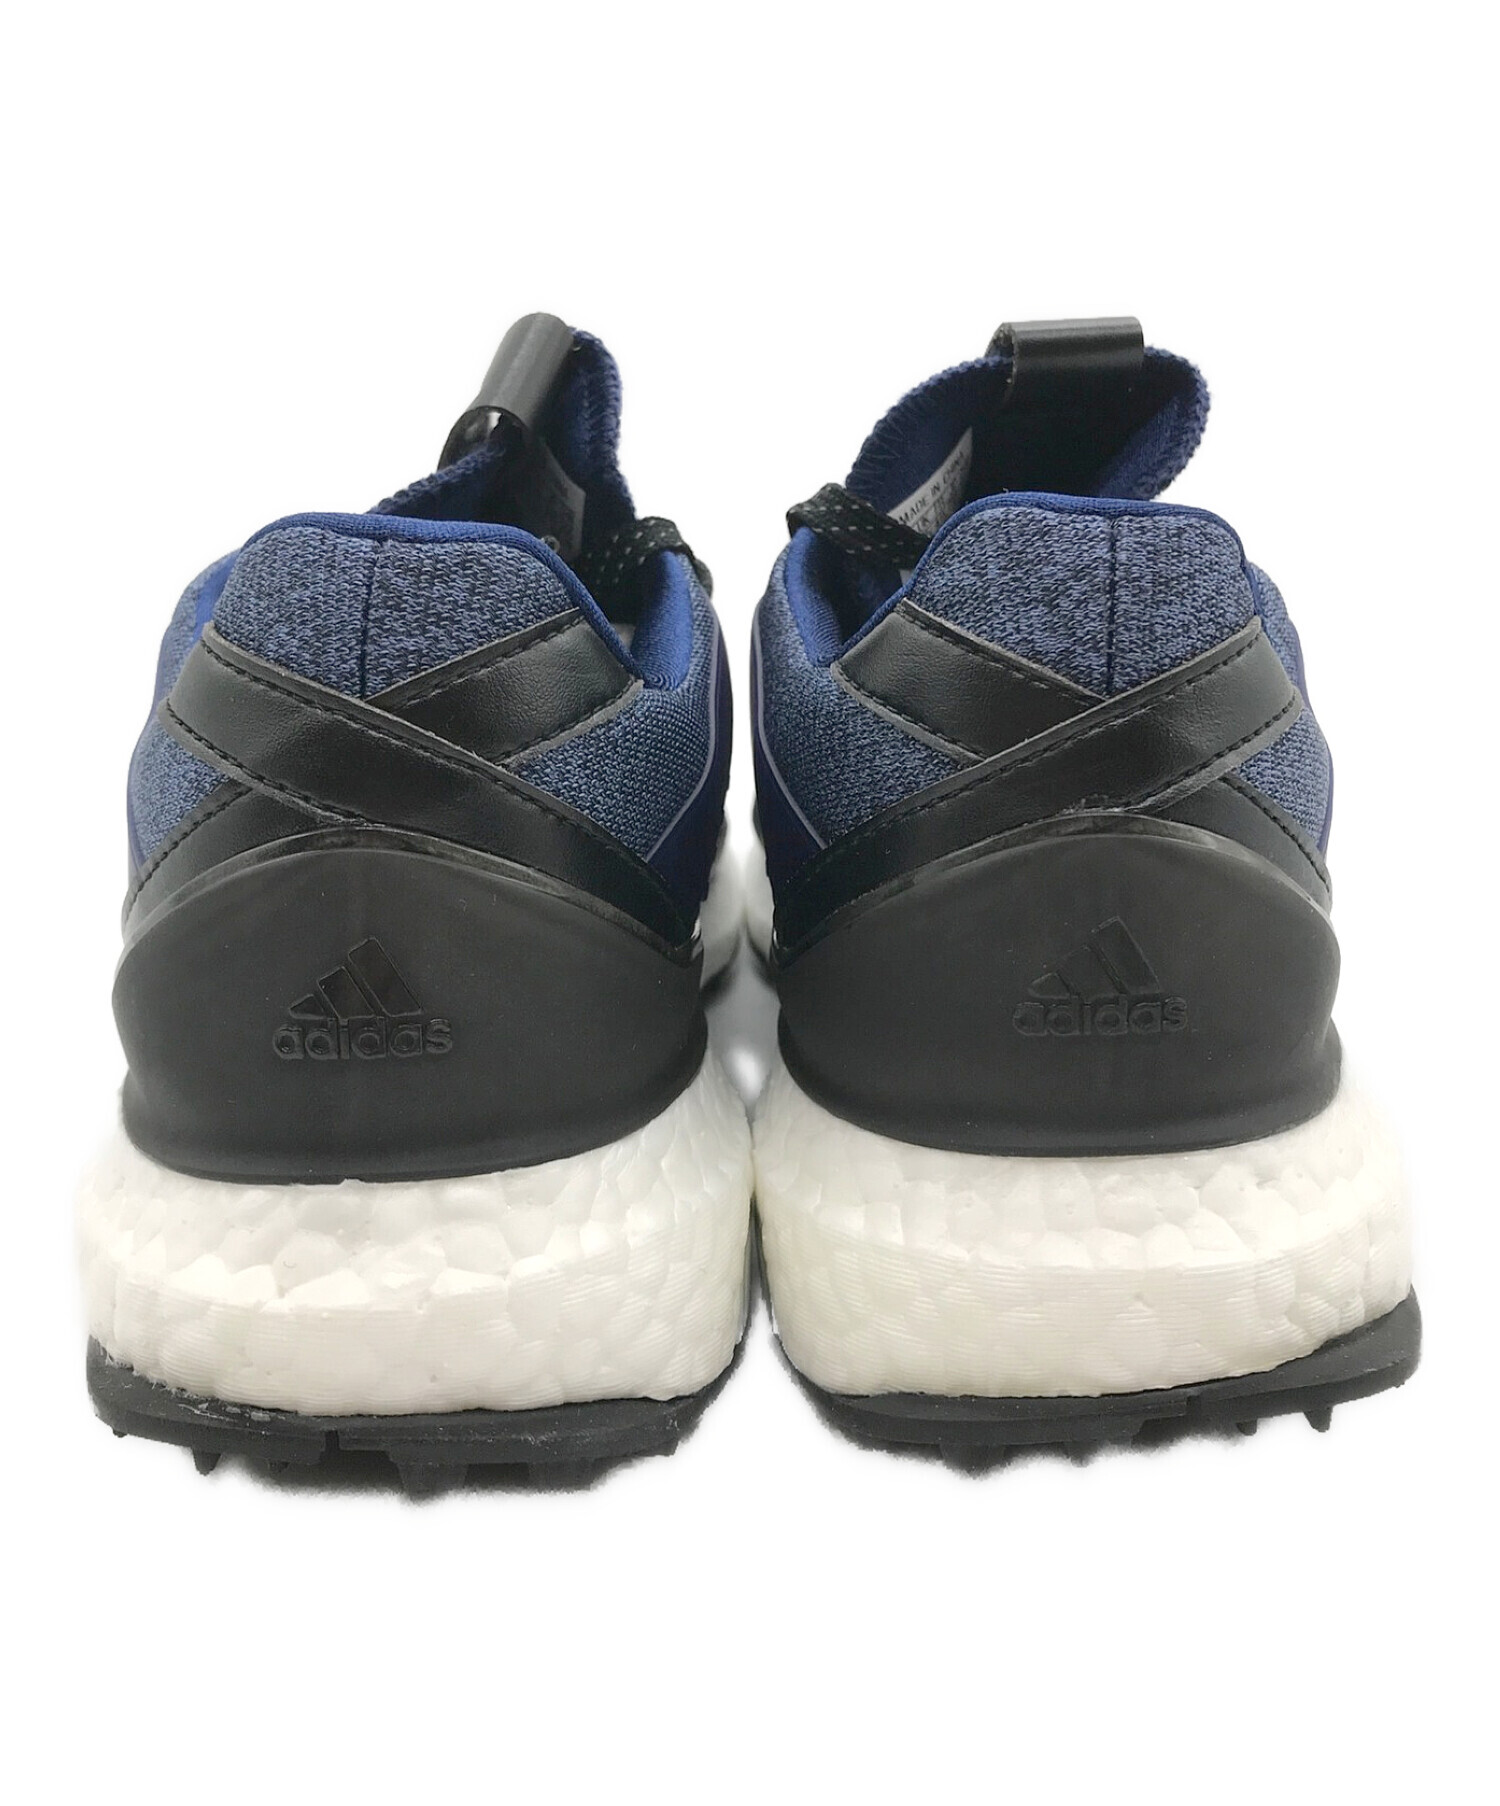 adidas (アディダス) ゴルフシューズ ネイビー サイズ:25.5cm